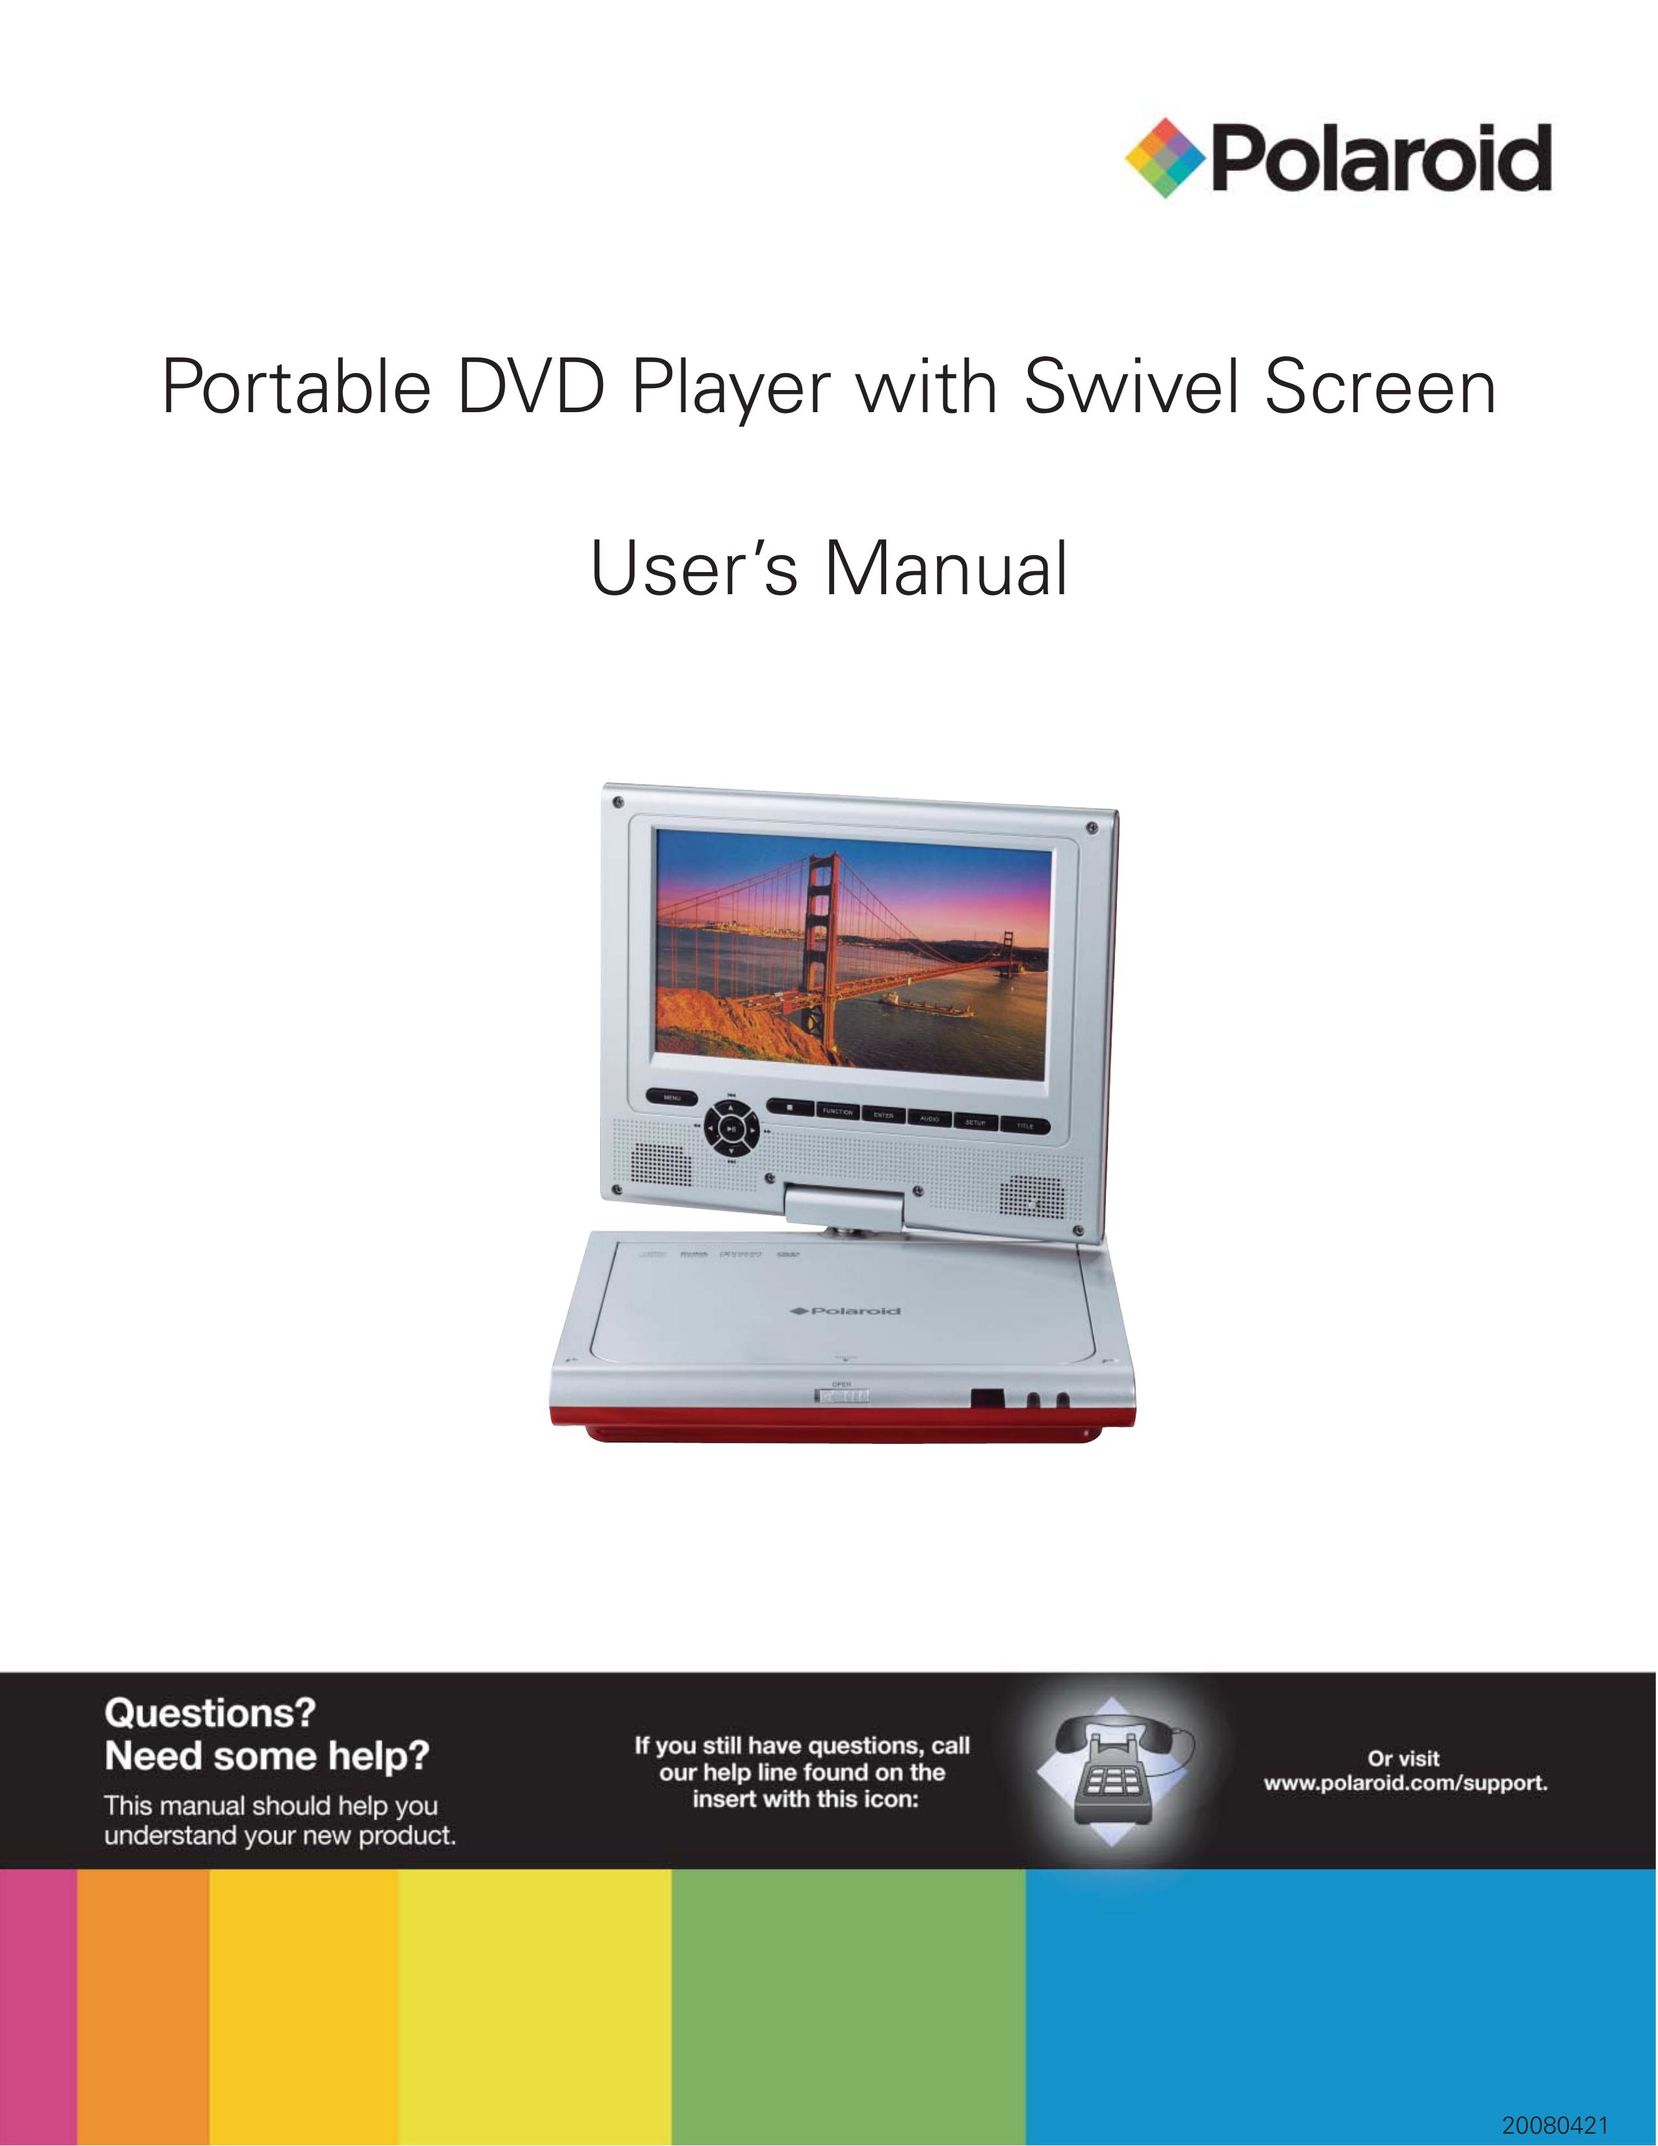 Polaroid 20071226 Portable DVD Player User Manual